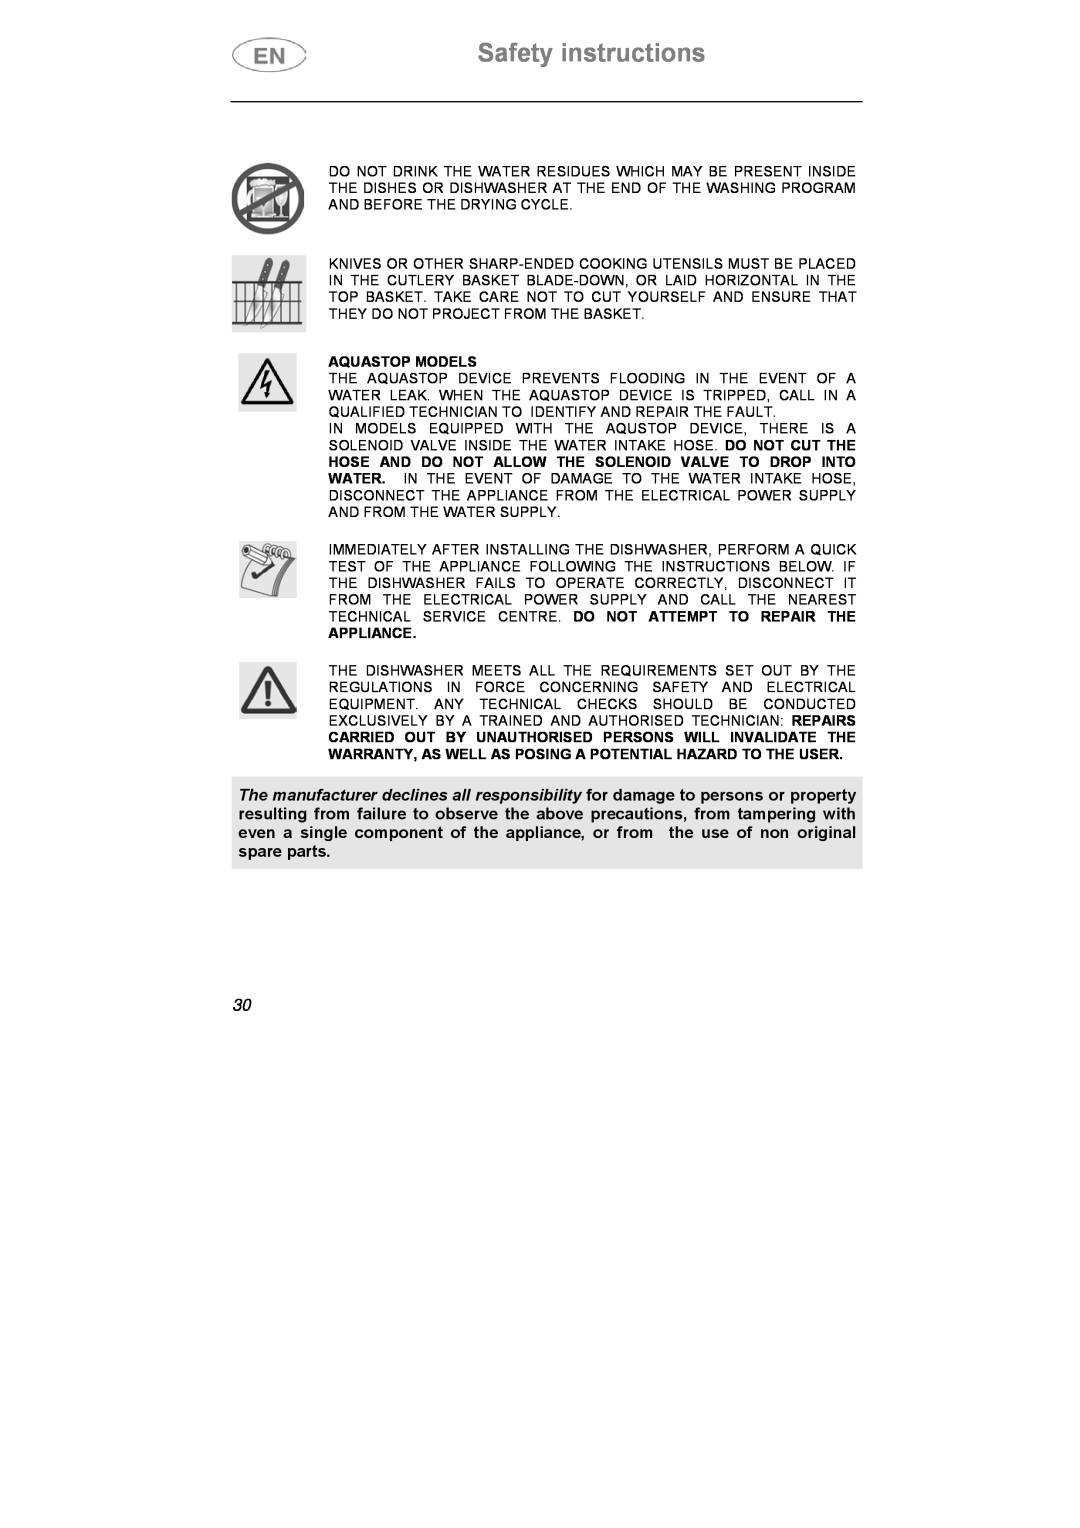 CDA VW80 manual Safety instructions, Aquastop Models, Appliance 